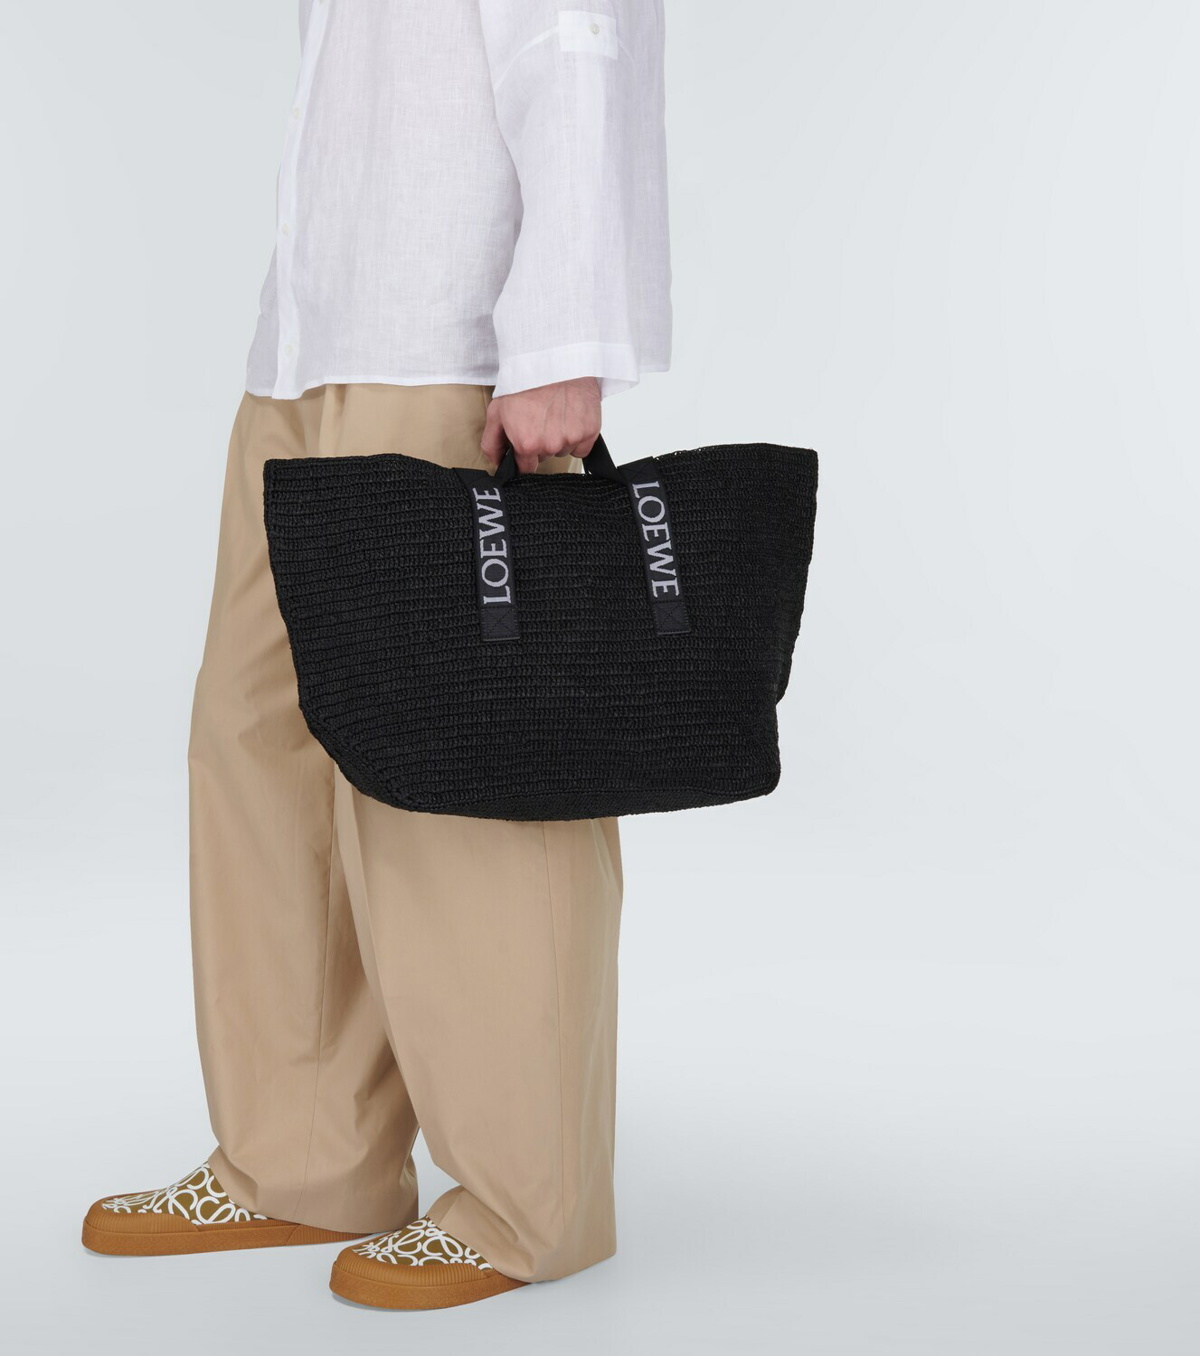 Loewe Fold Raffia Shopper Tote Bag Natural/Tan